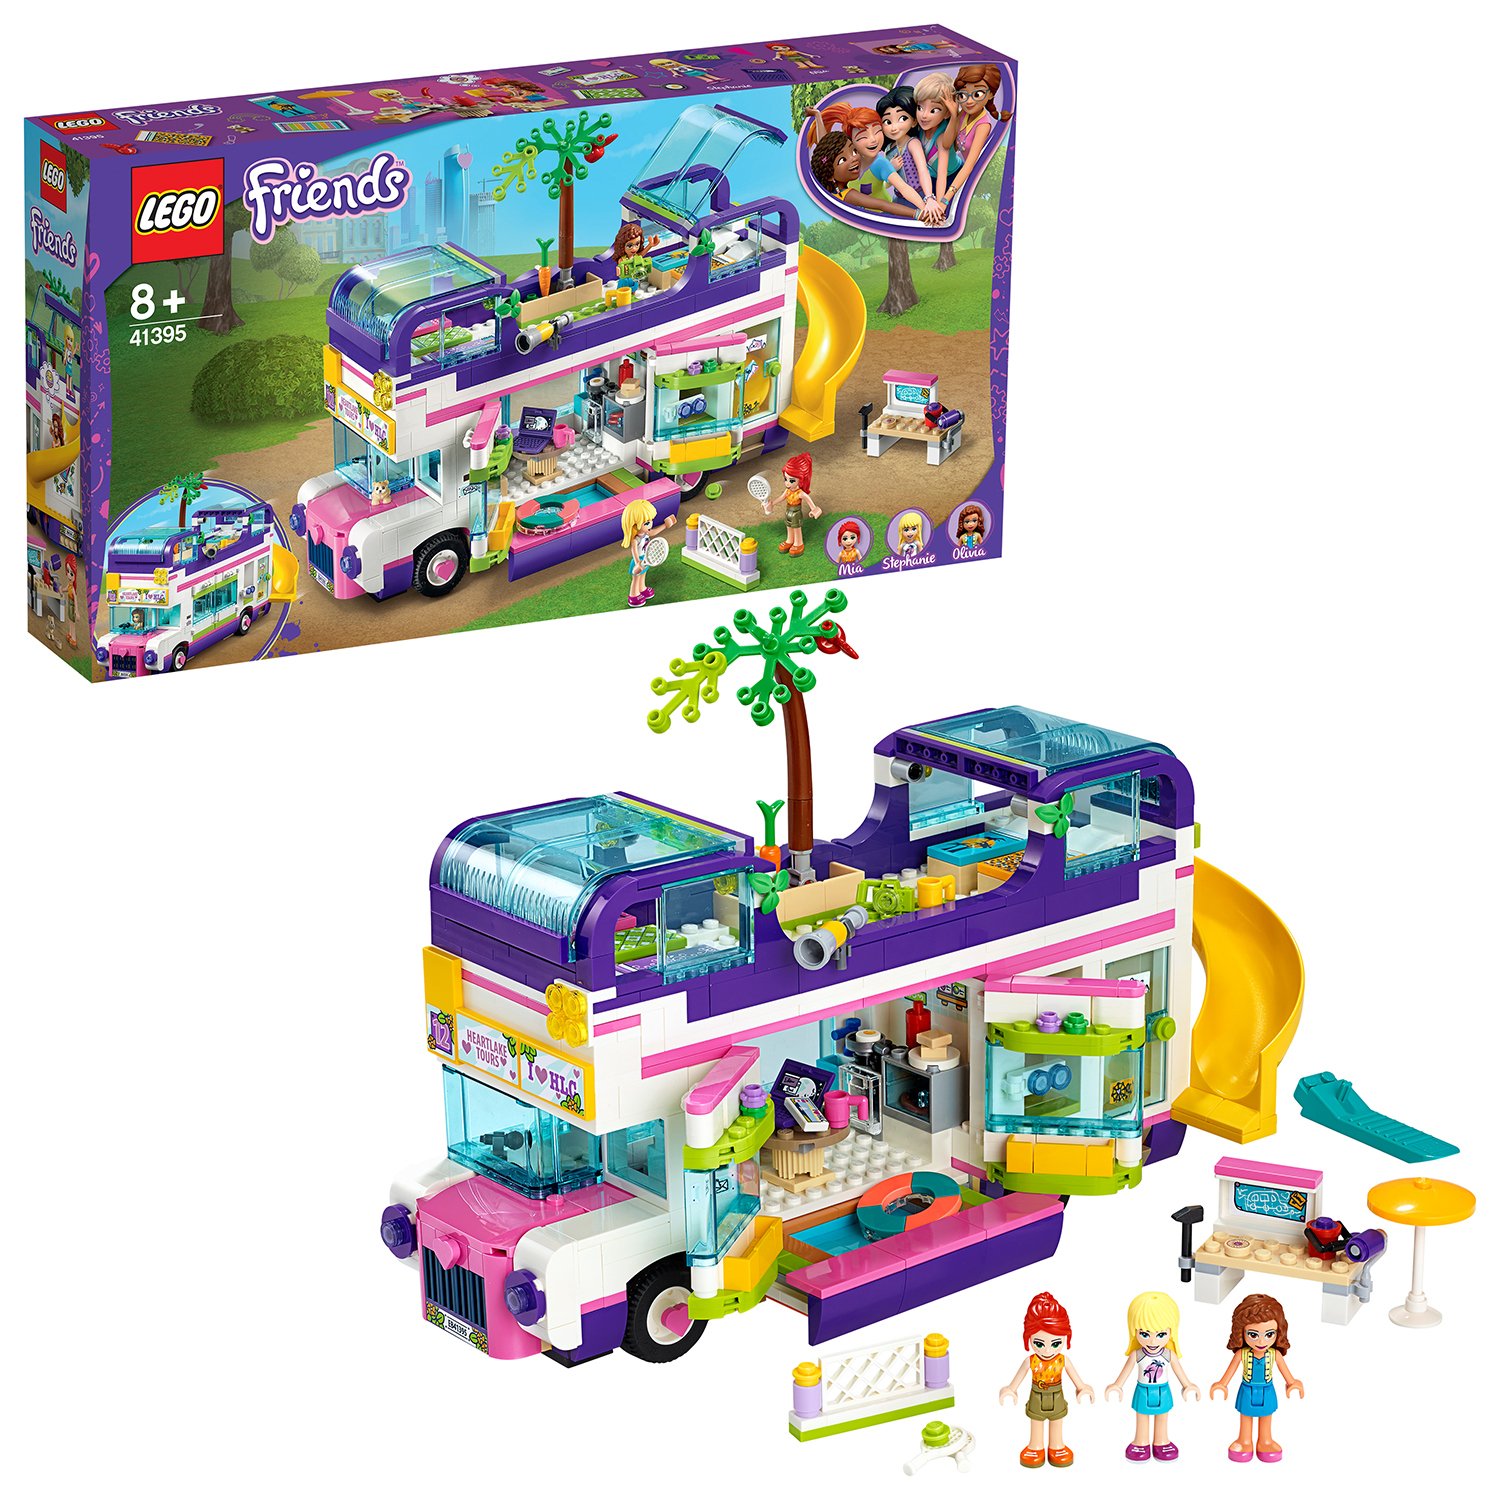 Buy LEGO Friends Friendship Bus Toy 